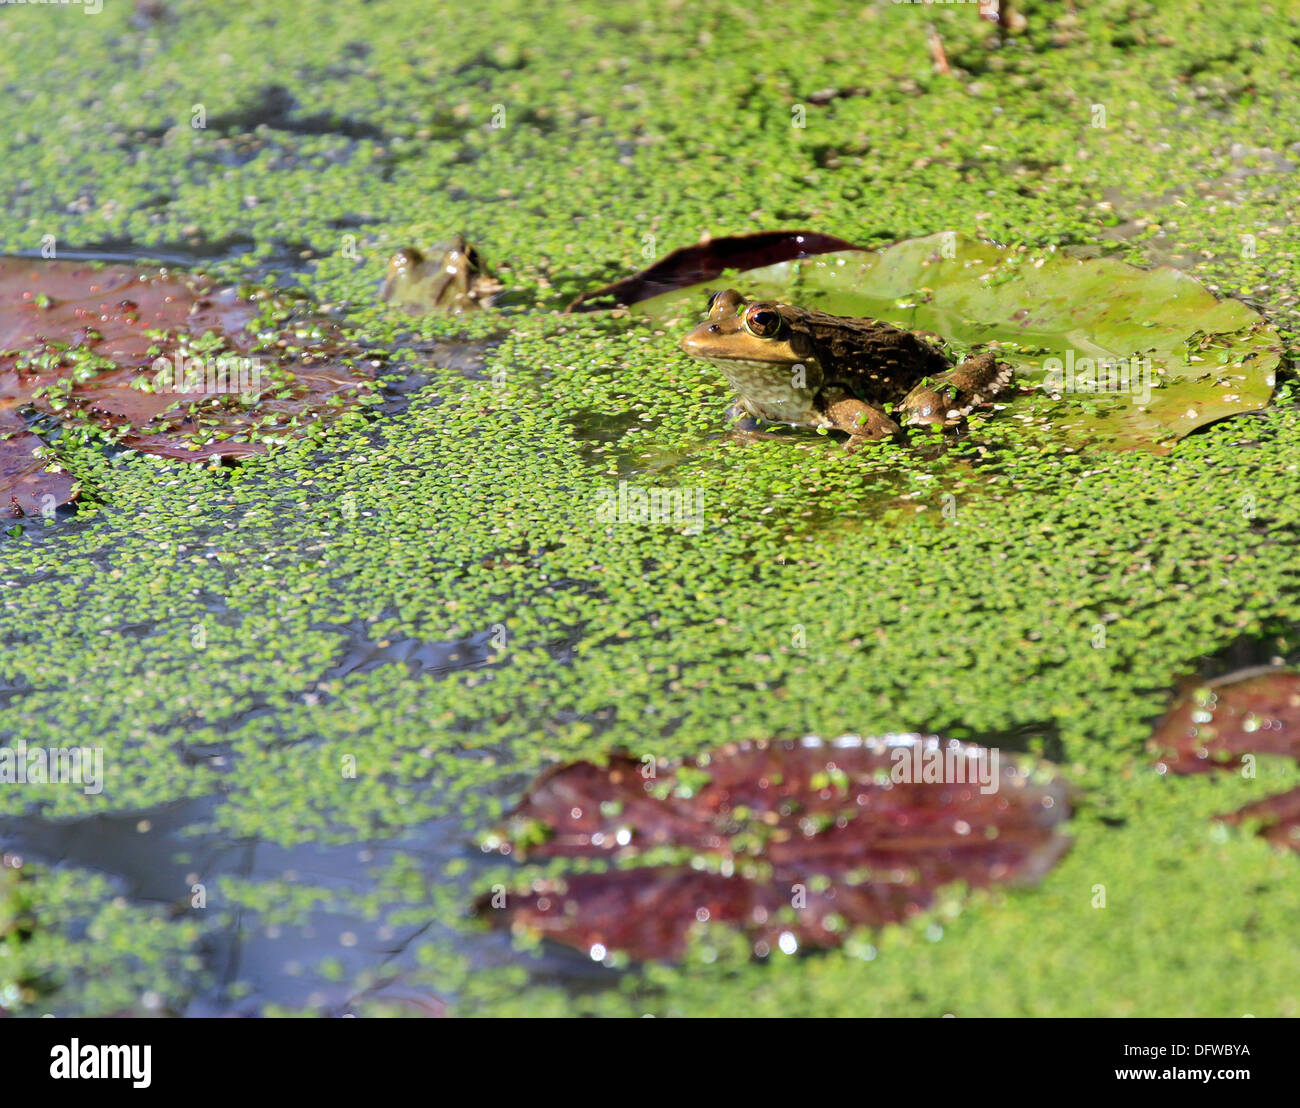 Amietia fuscigula (Cape River Frog) in a  pond with duckweeds in the gardens of Vergelegen Wine estate in the Cape winelands. Stock Photo